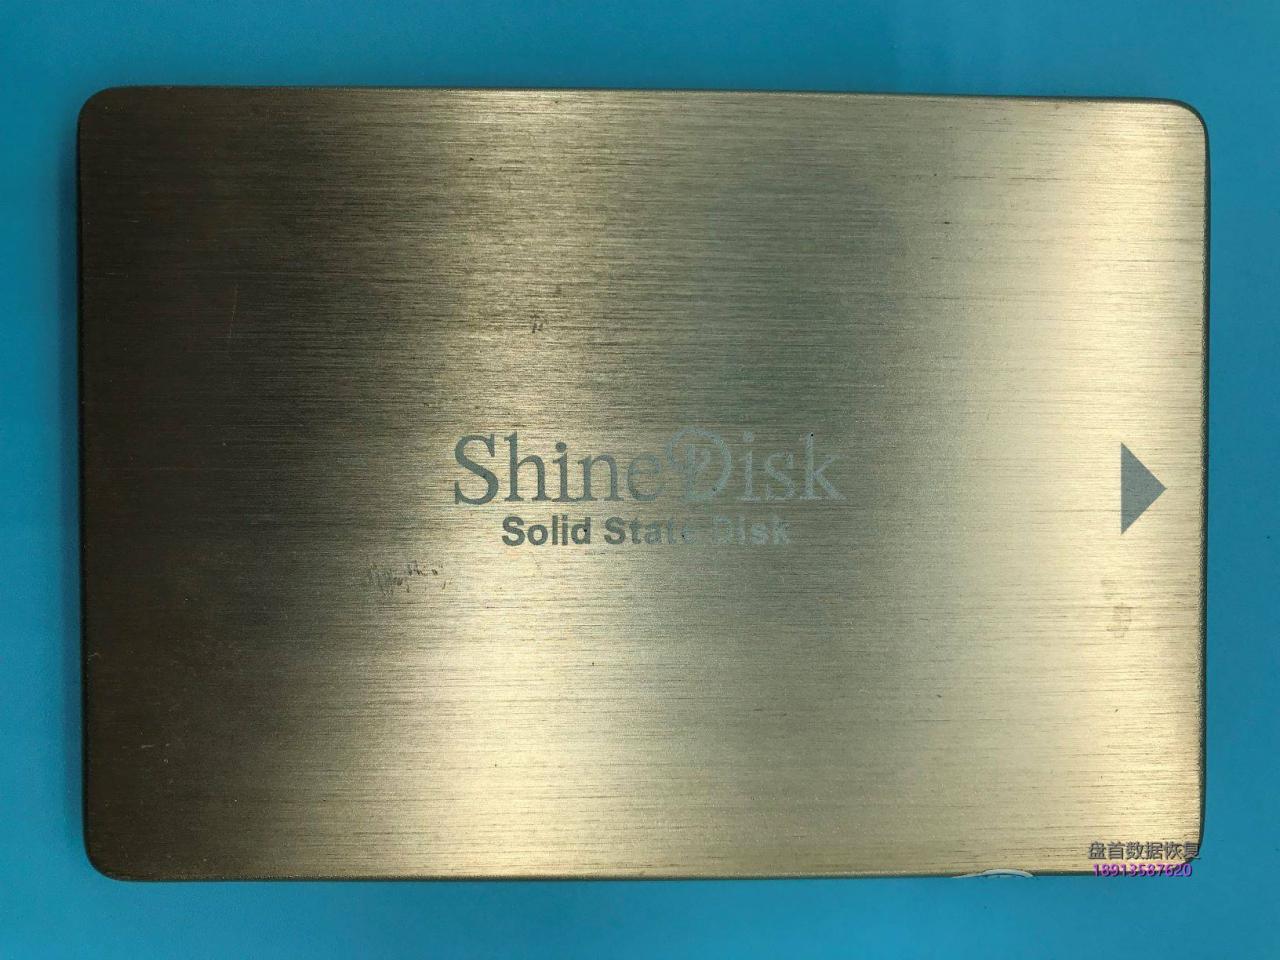 SM2246XT主控无法识别不读盘成功恢复云储ShineDisk M667 120g固态硬盘